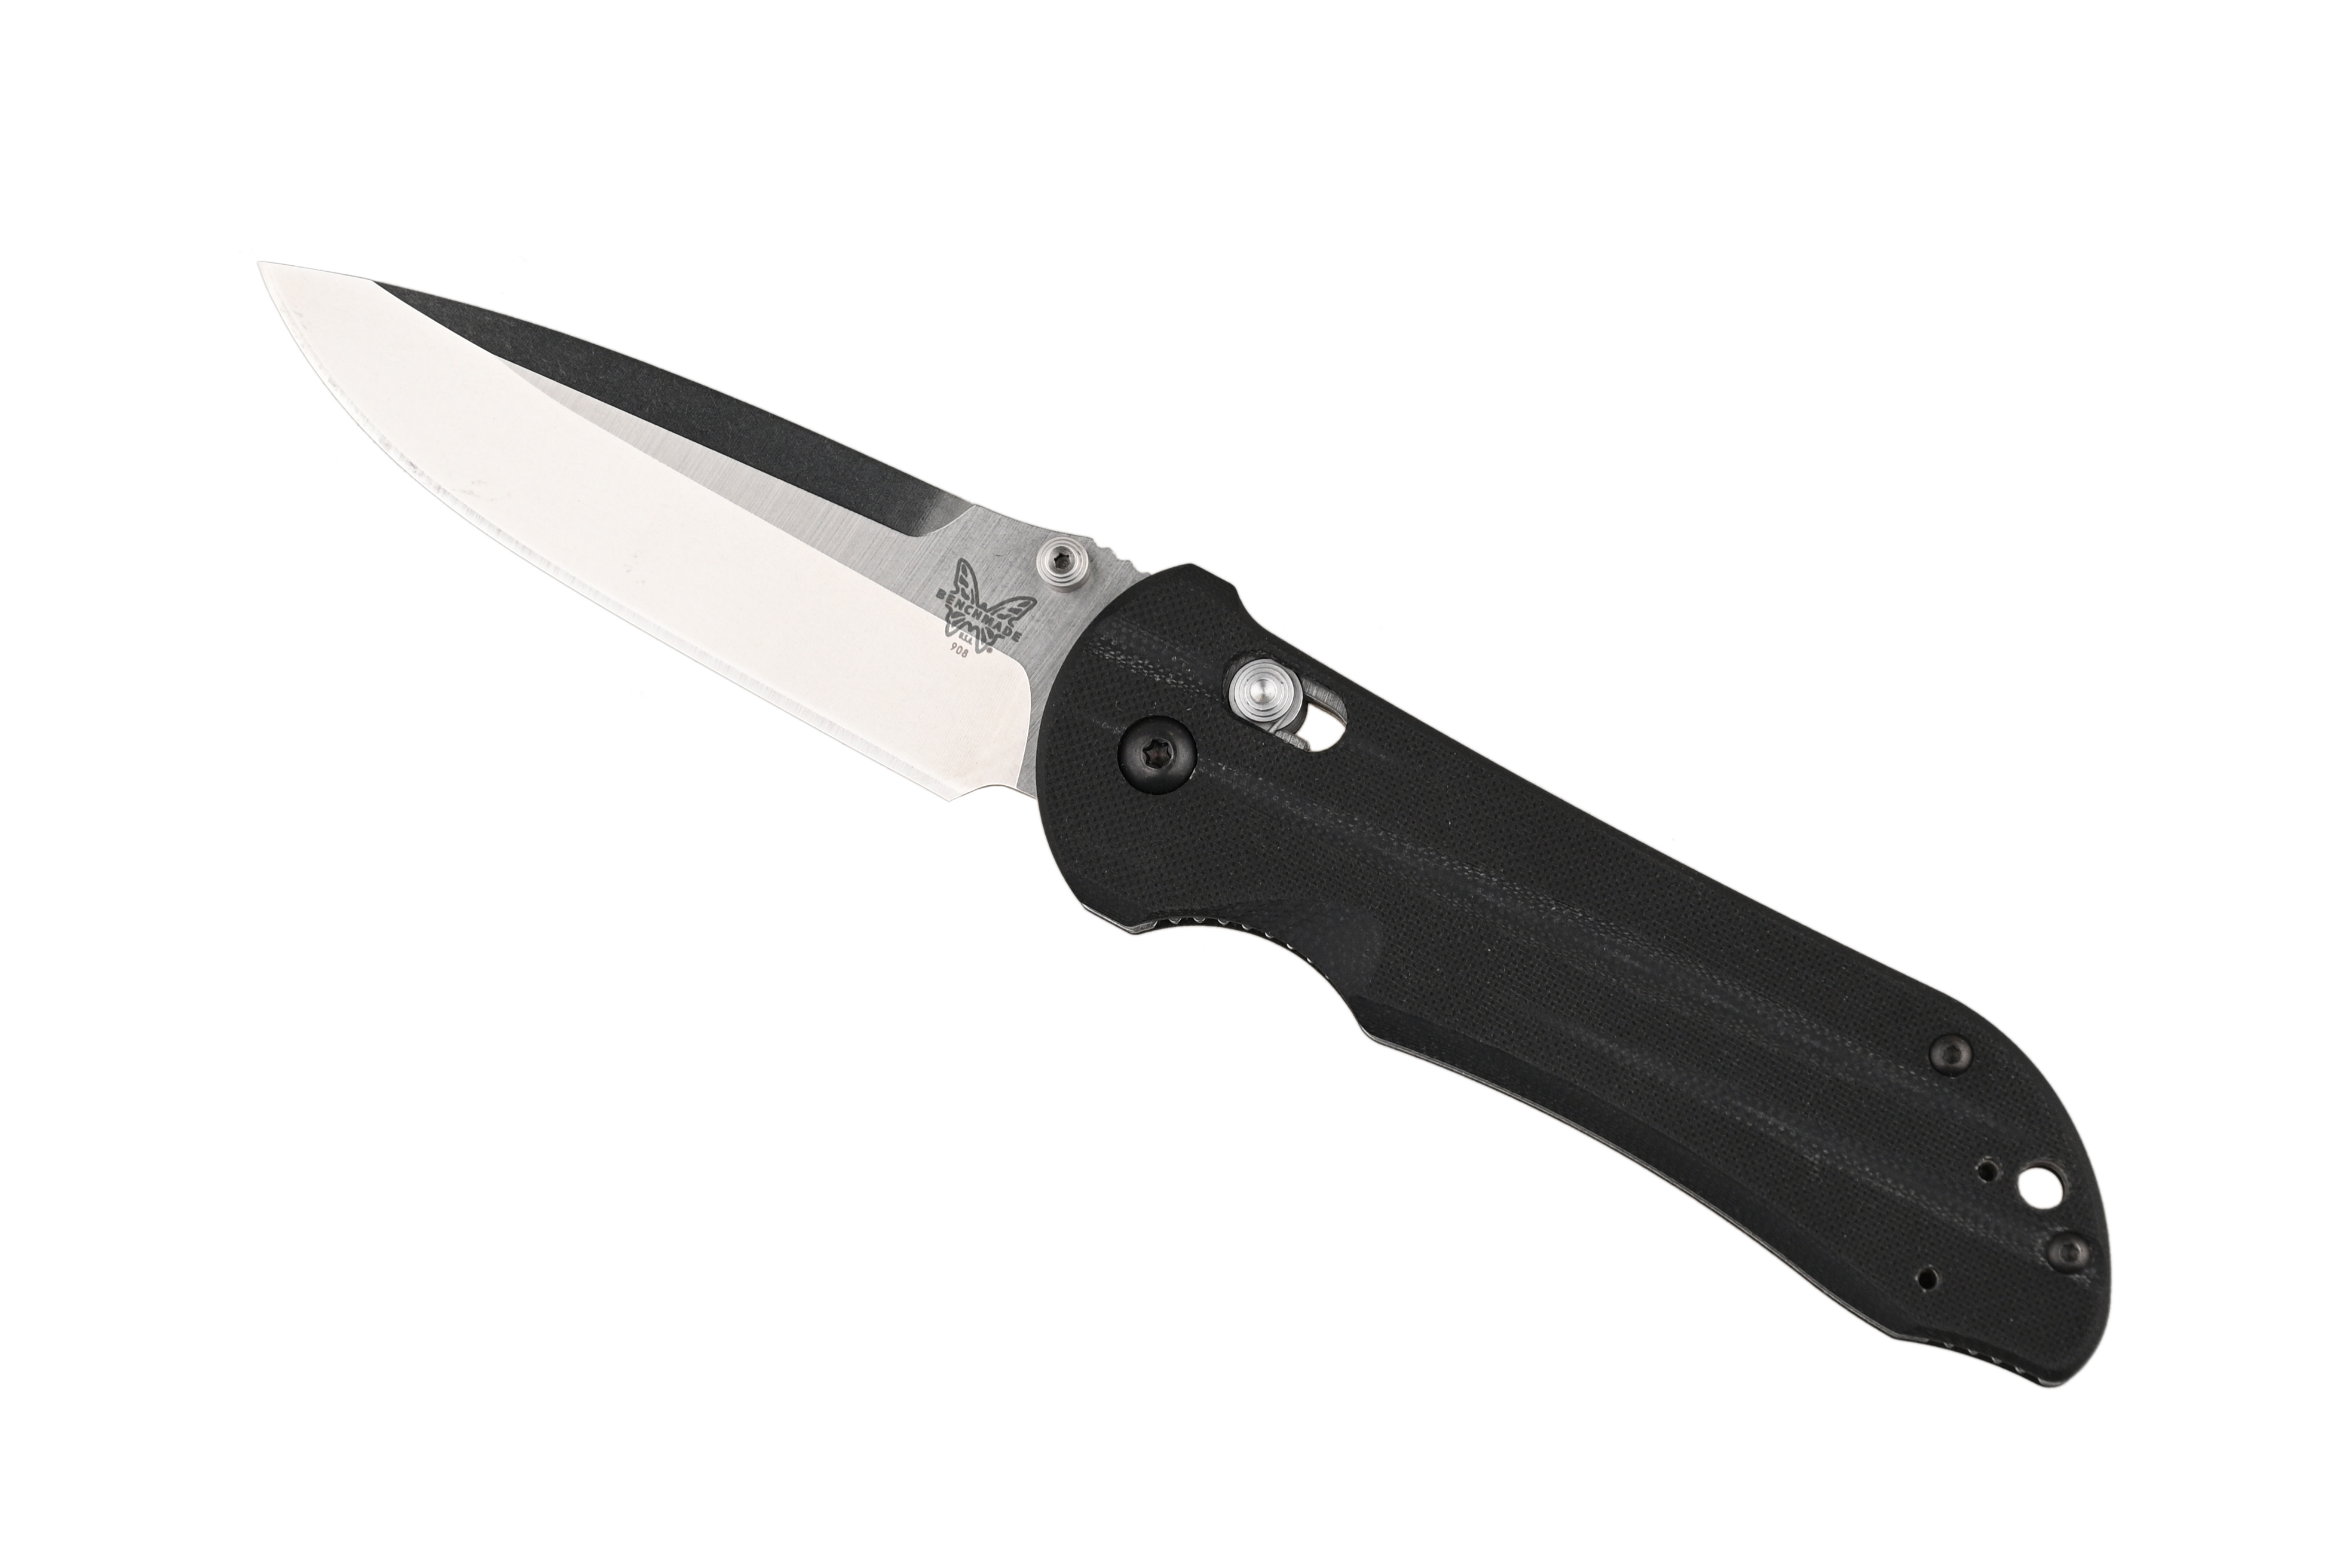 Нож Benchmade Stryker складной сталь 154CM - фото 1